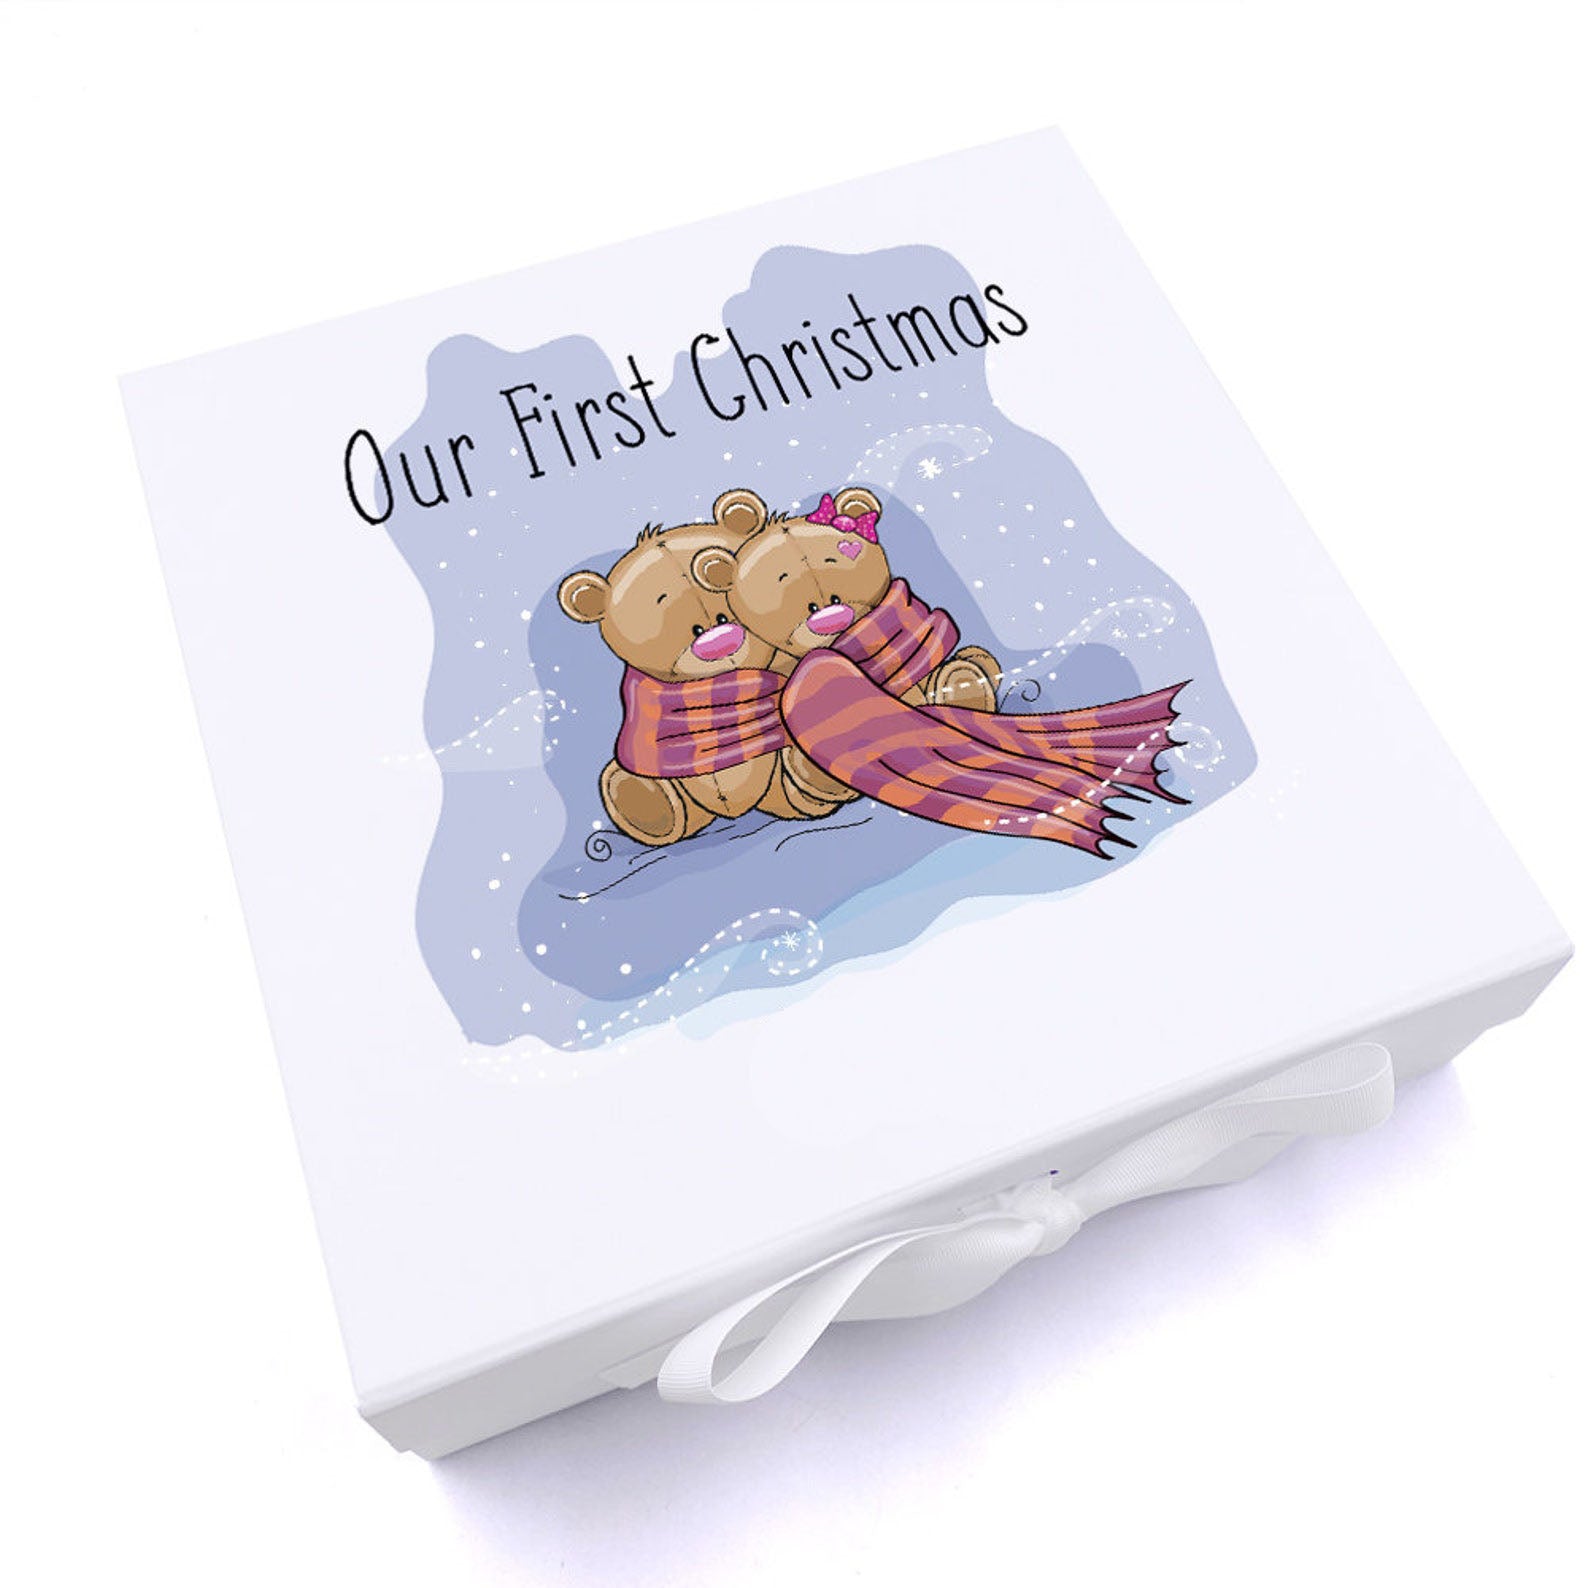 ukgiftstoreonline Personalised Our First Christmas Keepsake Memory Box Gift